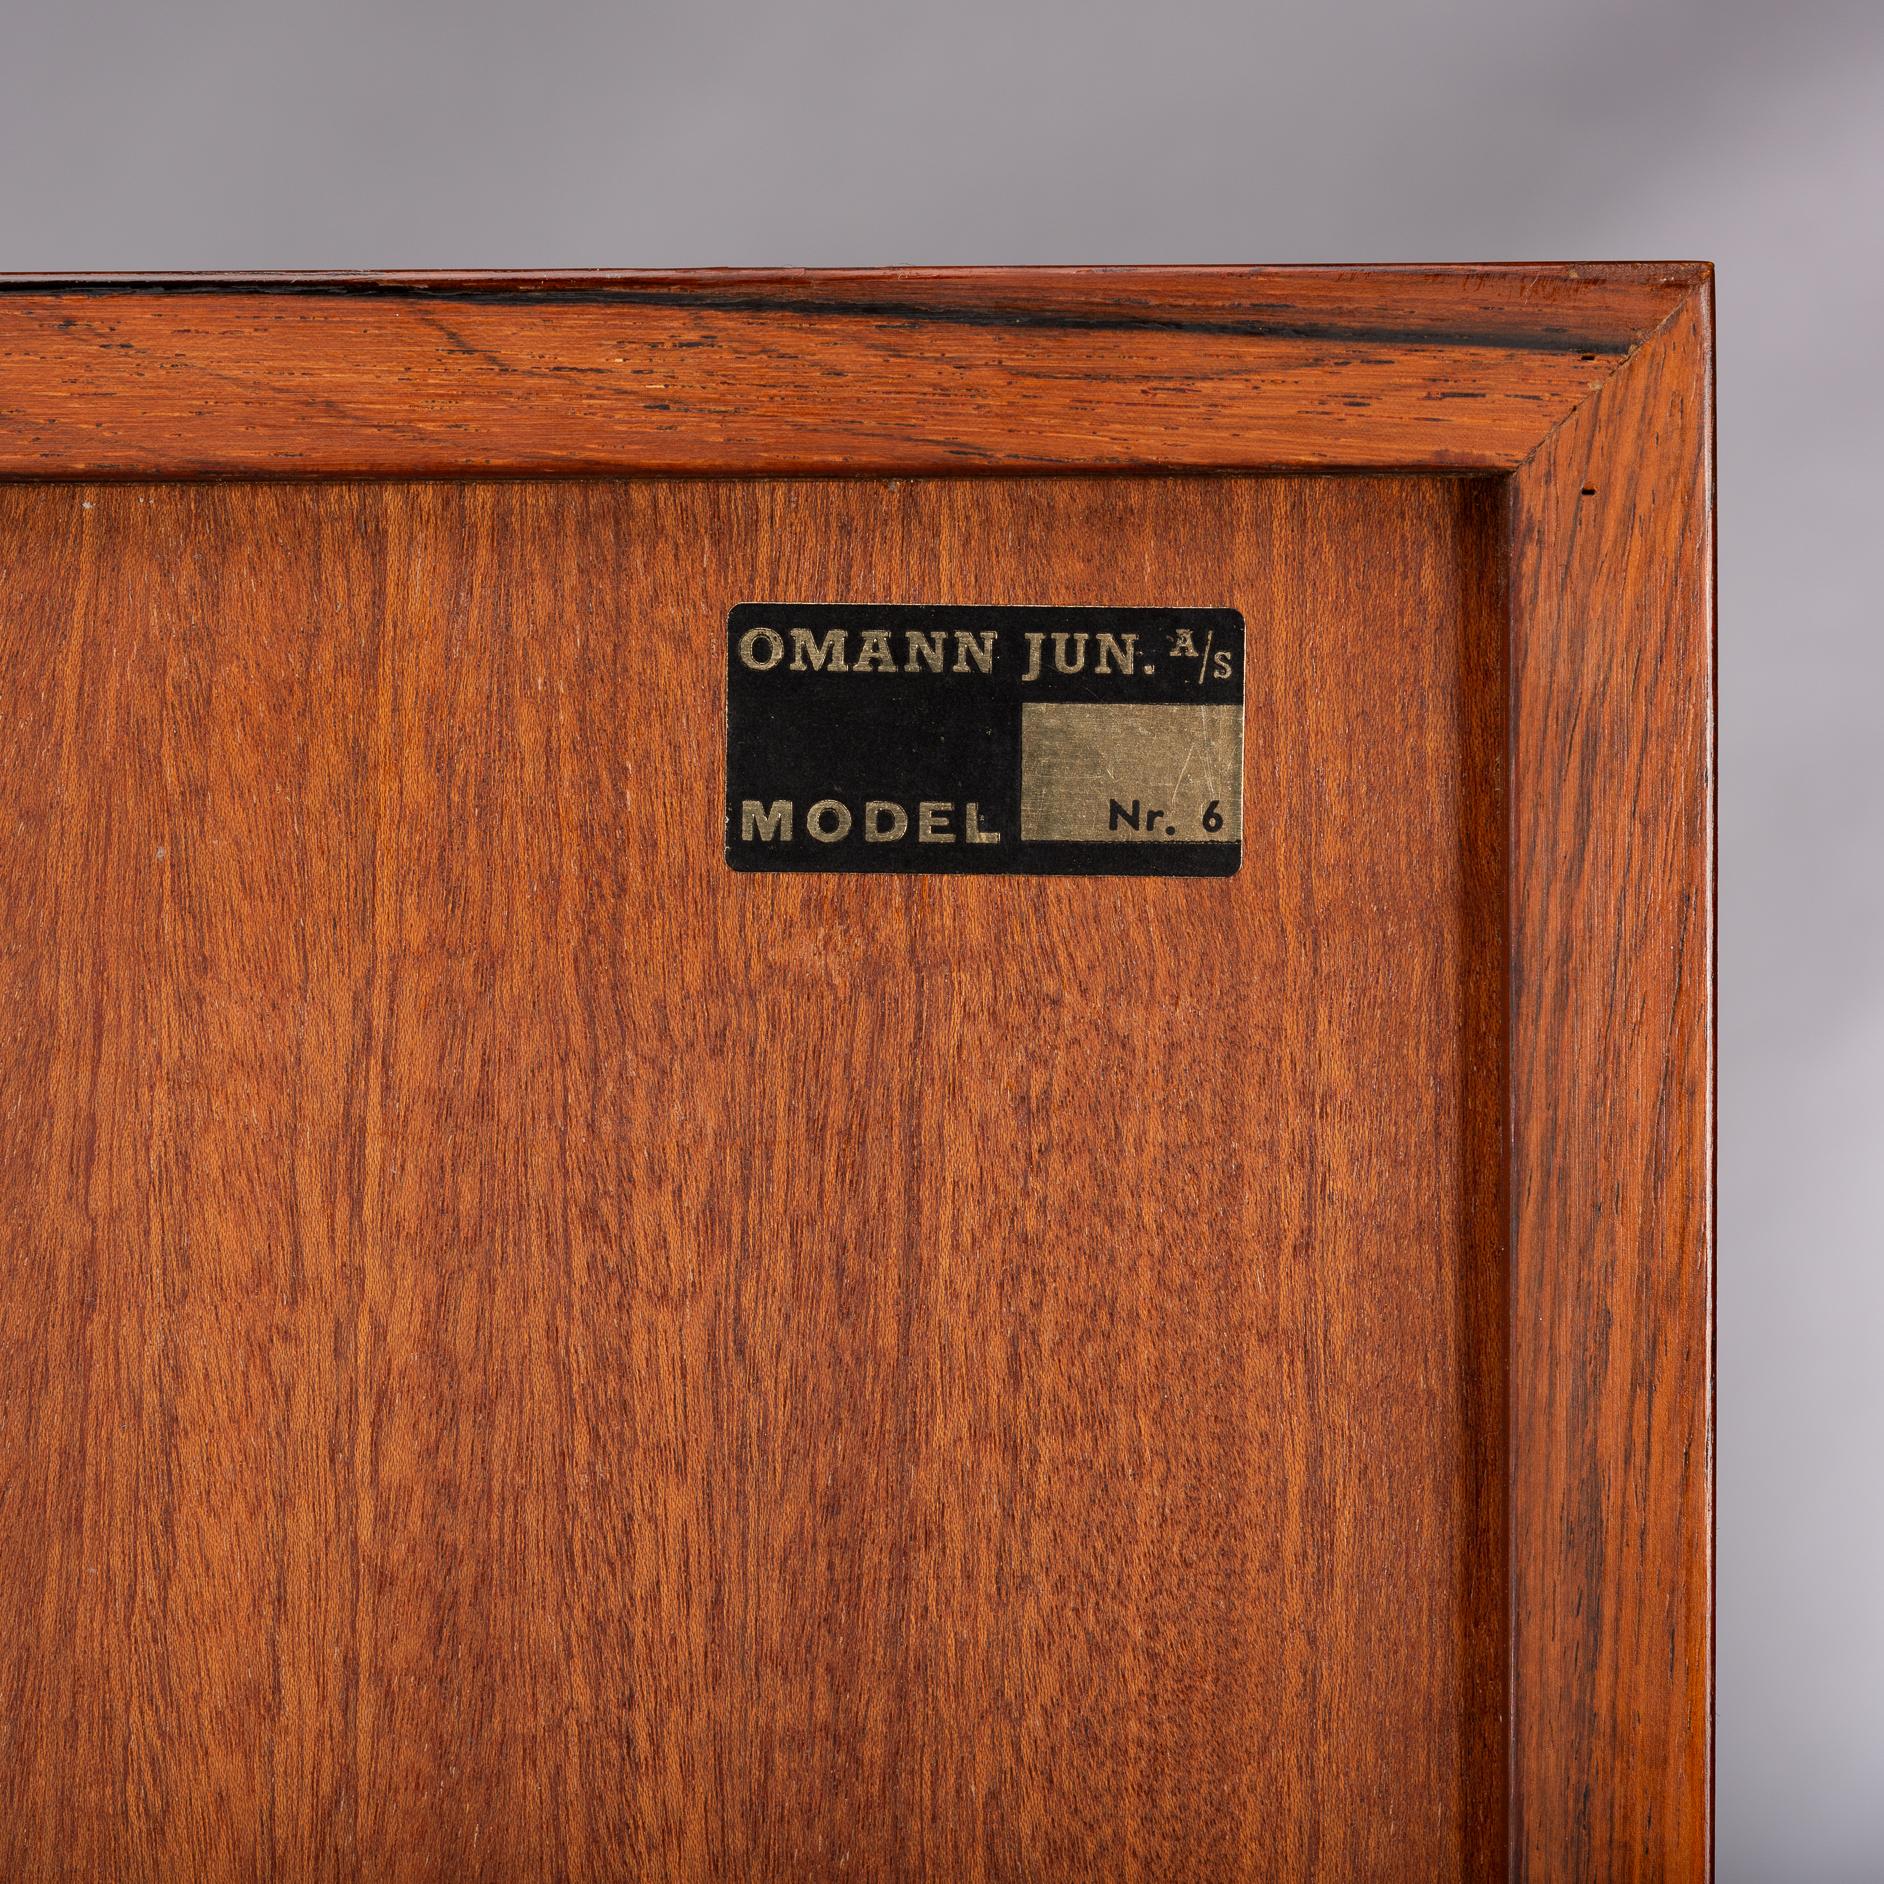 Mid-20th Century Danish Design Model 6 Rosewood Bookcase by Gunni Omann for Omann Jun, 1960s For Sale